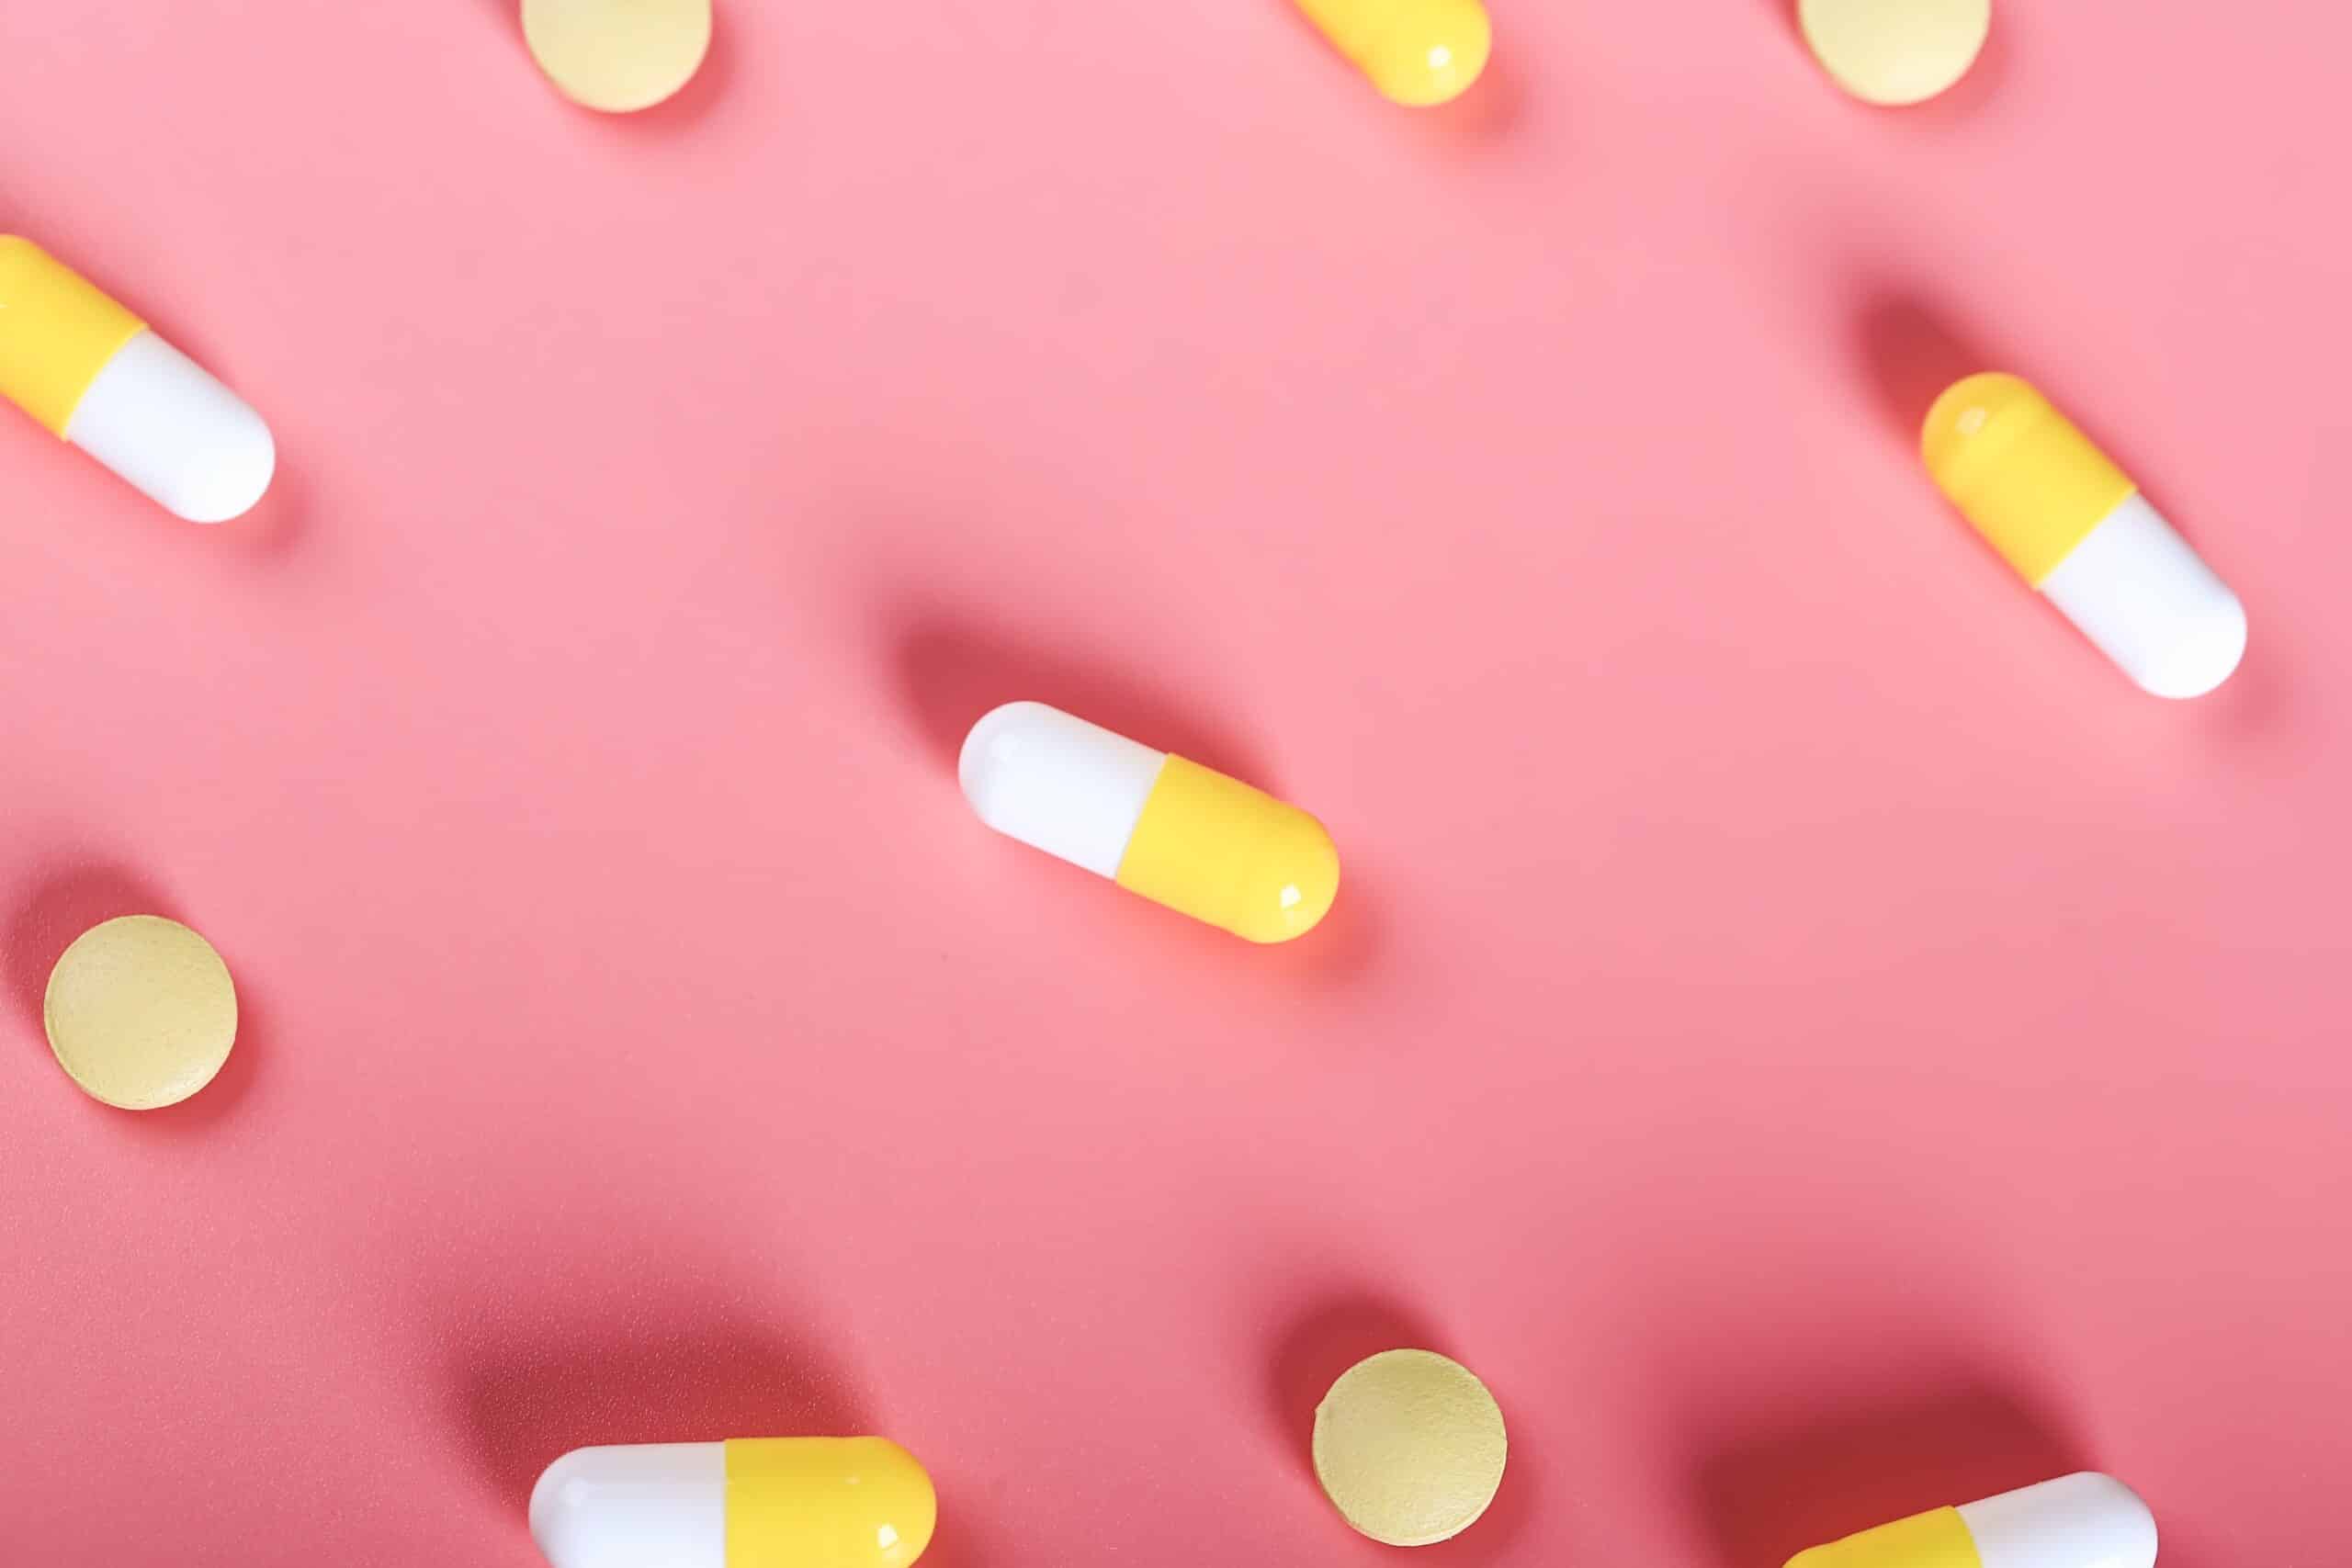 yellow pills pills on a pink background 2022 11 01 00 07 46 utc scaled